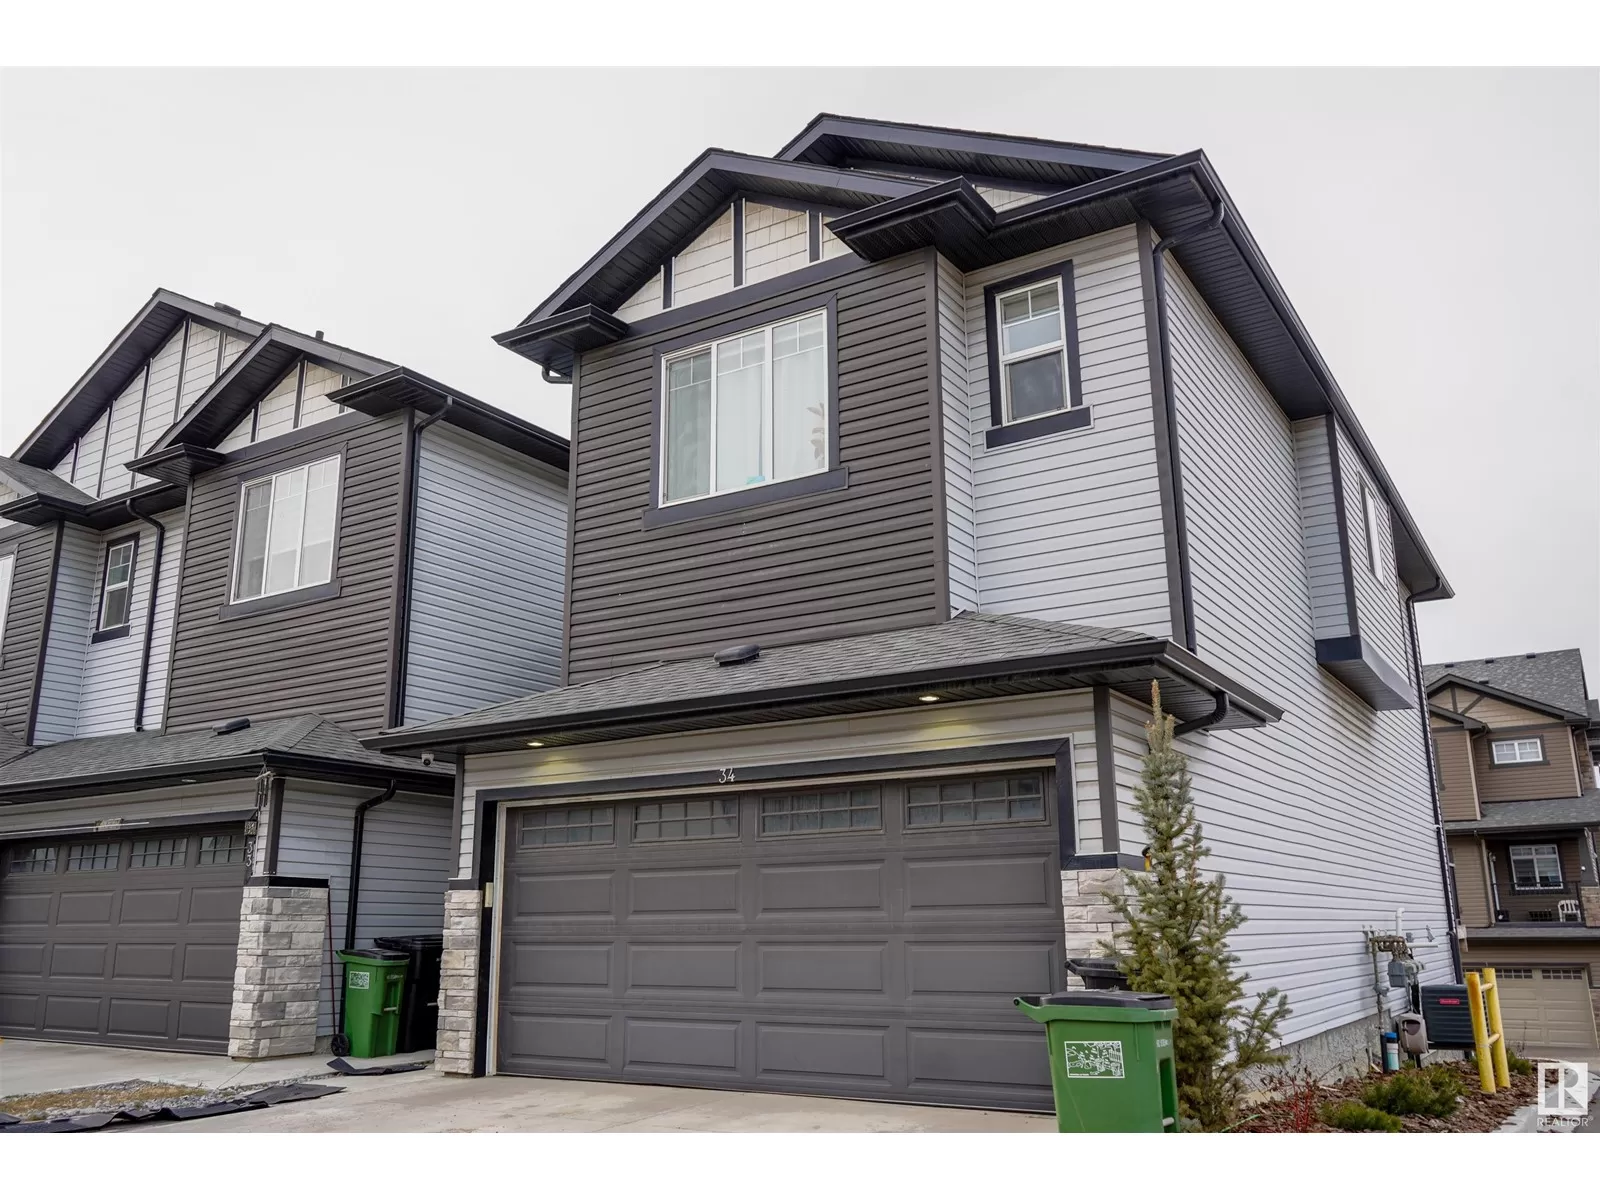 Duplex for rent: #34 1703 16 Av Nw, Edmonton, Alberta T6T 2C3